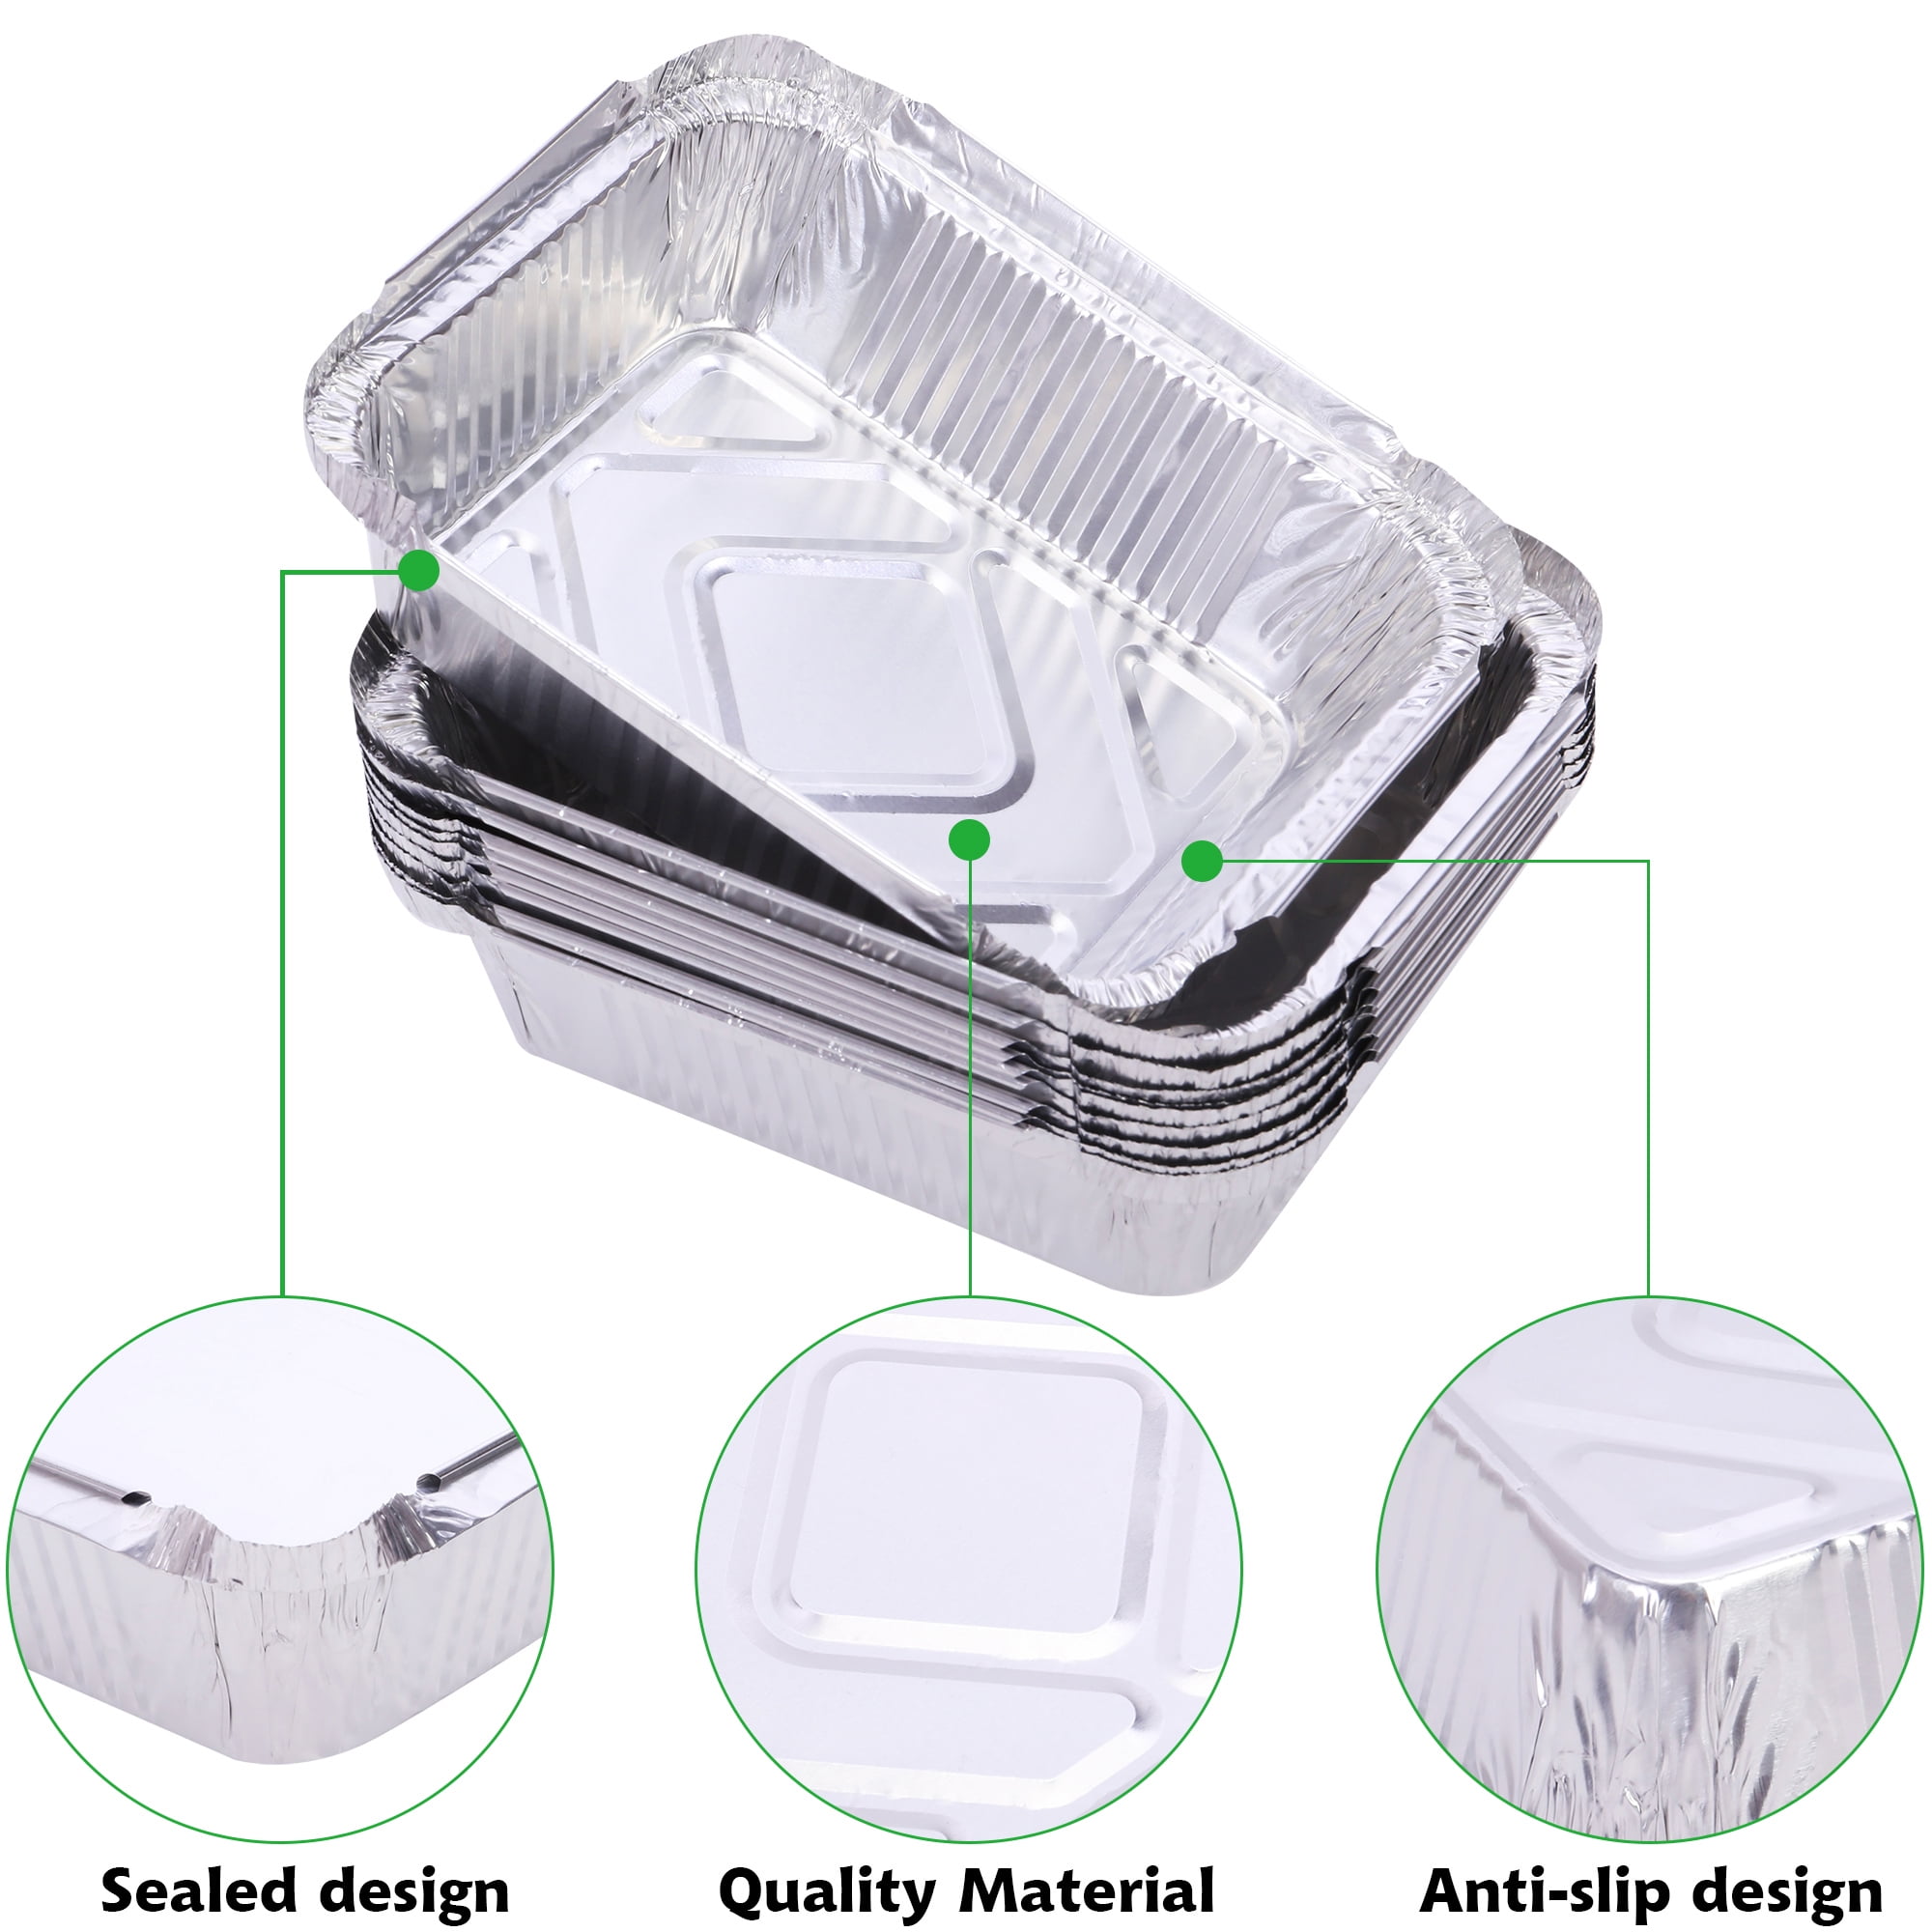 16 oz Disposable Aluminum Foil Pans with Clear Plastic Lids (50 Pack), PACK  - Fry's Food Stores